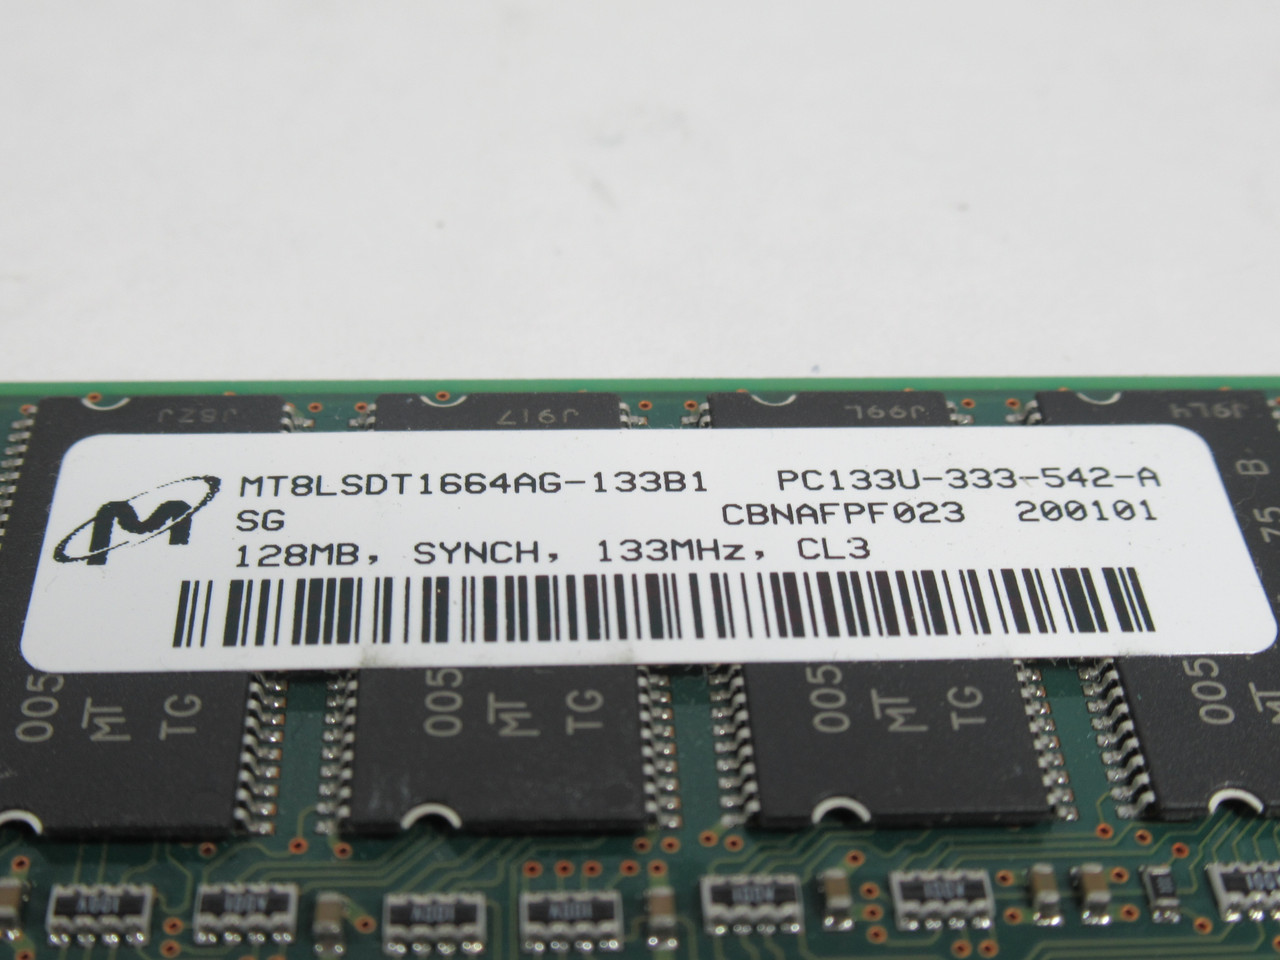 Micron MT8LSDT1664AG-133B1 SDRam Memory Module 128MB 133MHz USED